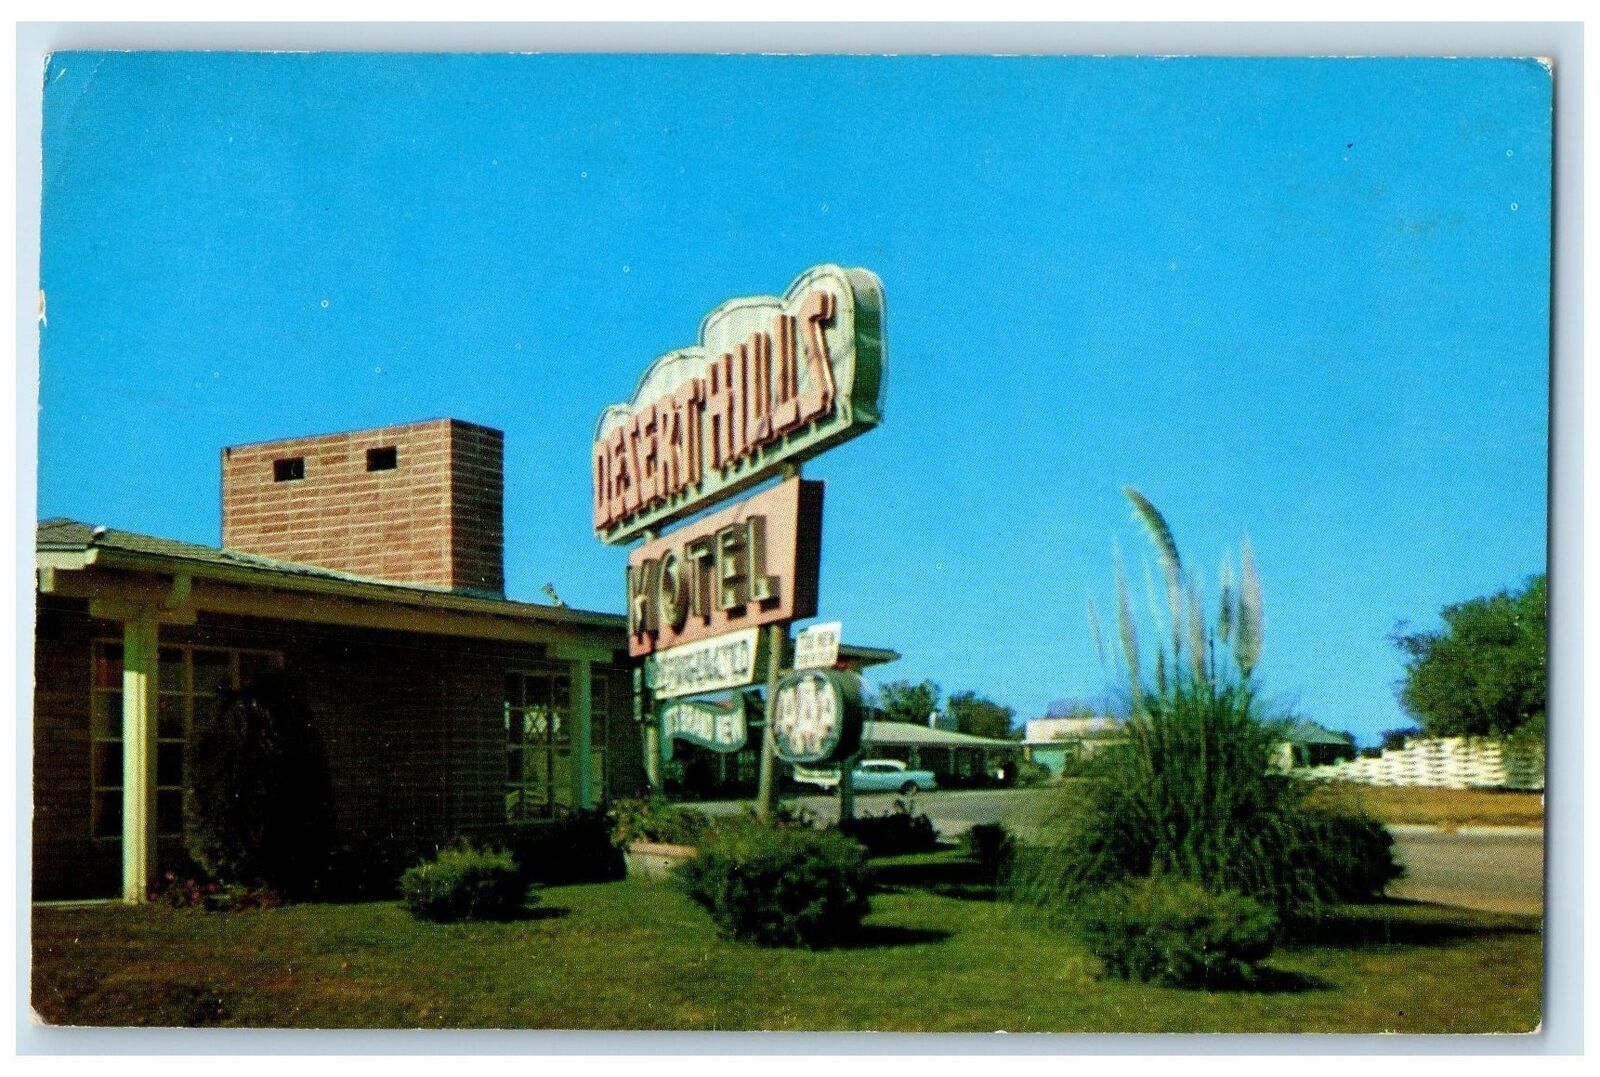 1960 Desert Hills Motel Roadside Hobbs New Mexico NM Posted Signage Postcard